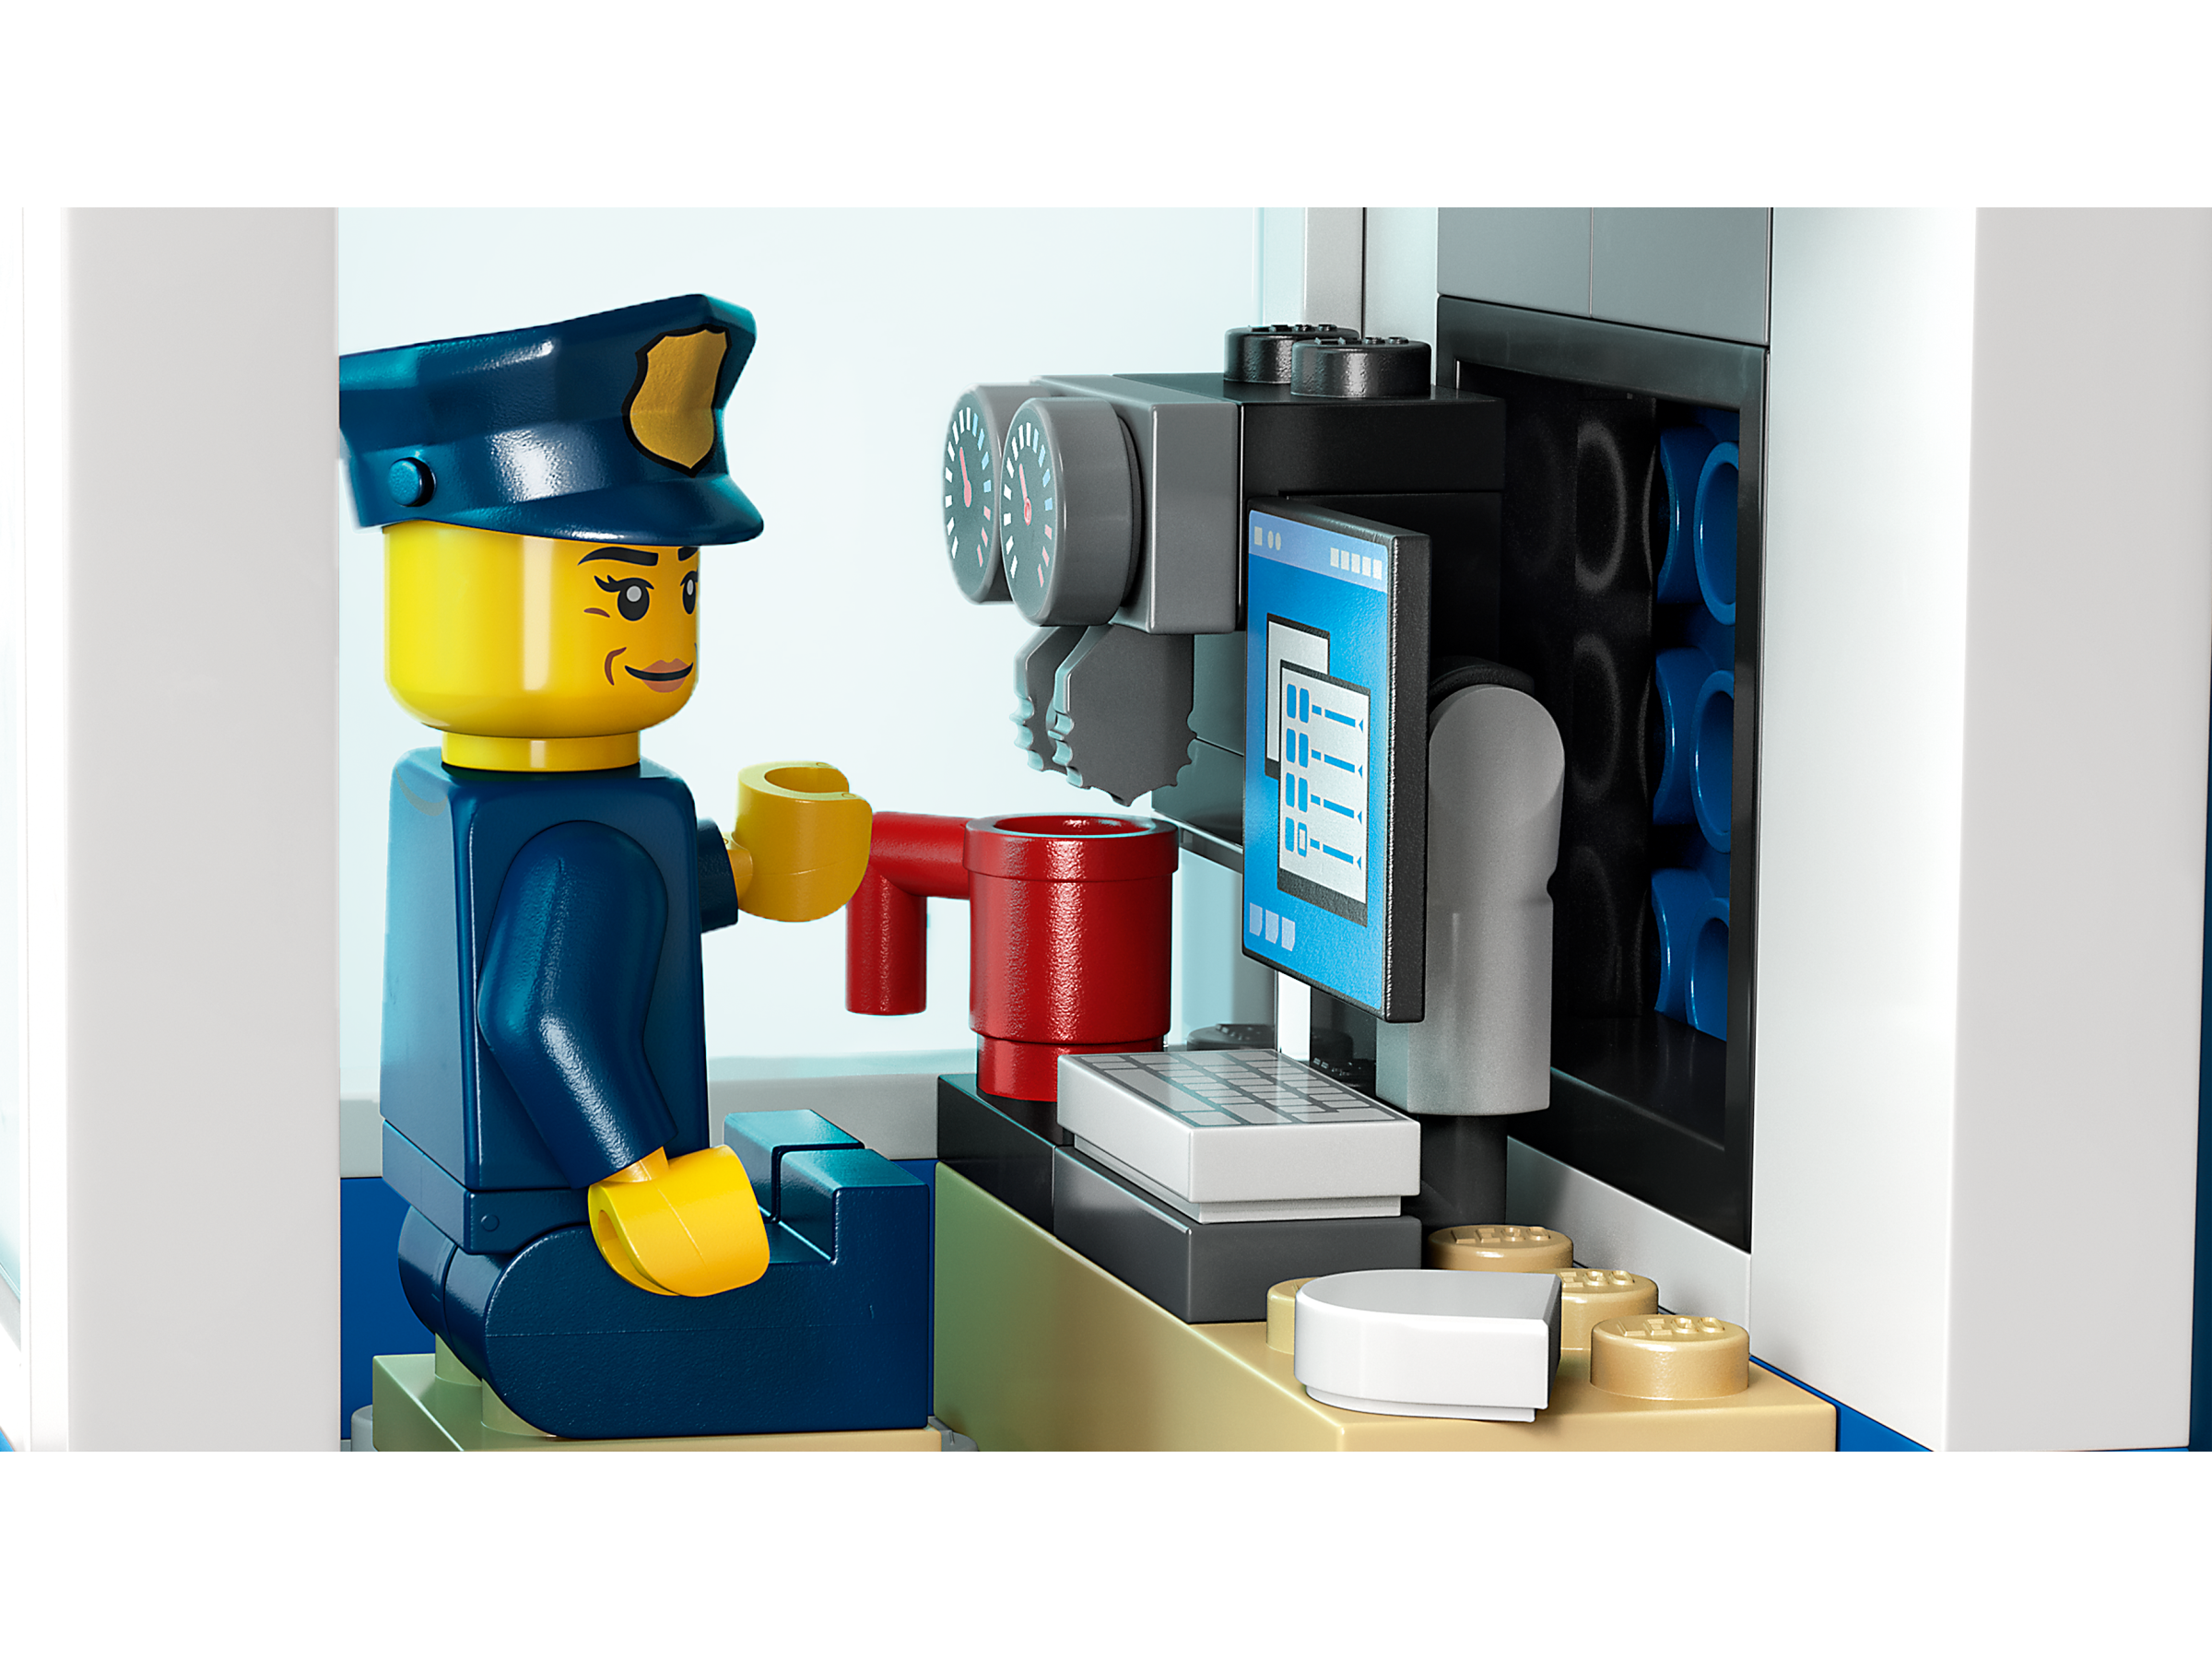 Le laboratoire de police scientifique mobile Lego